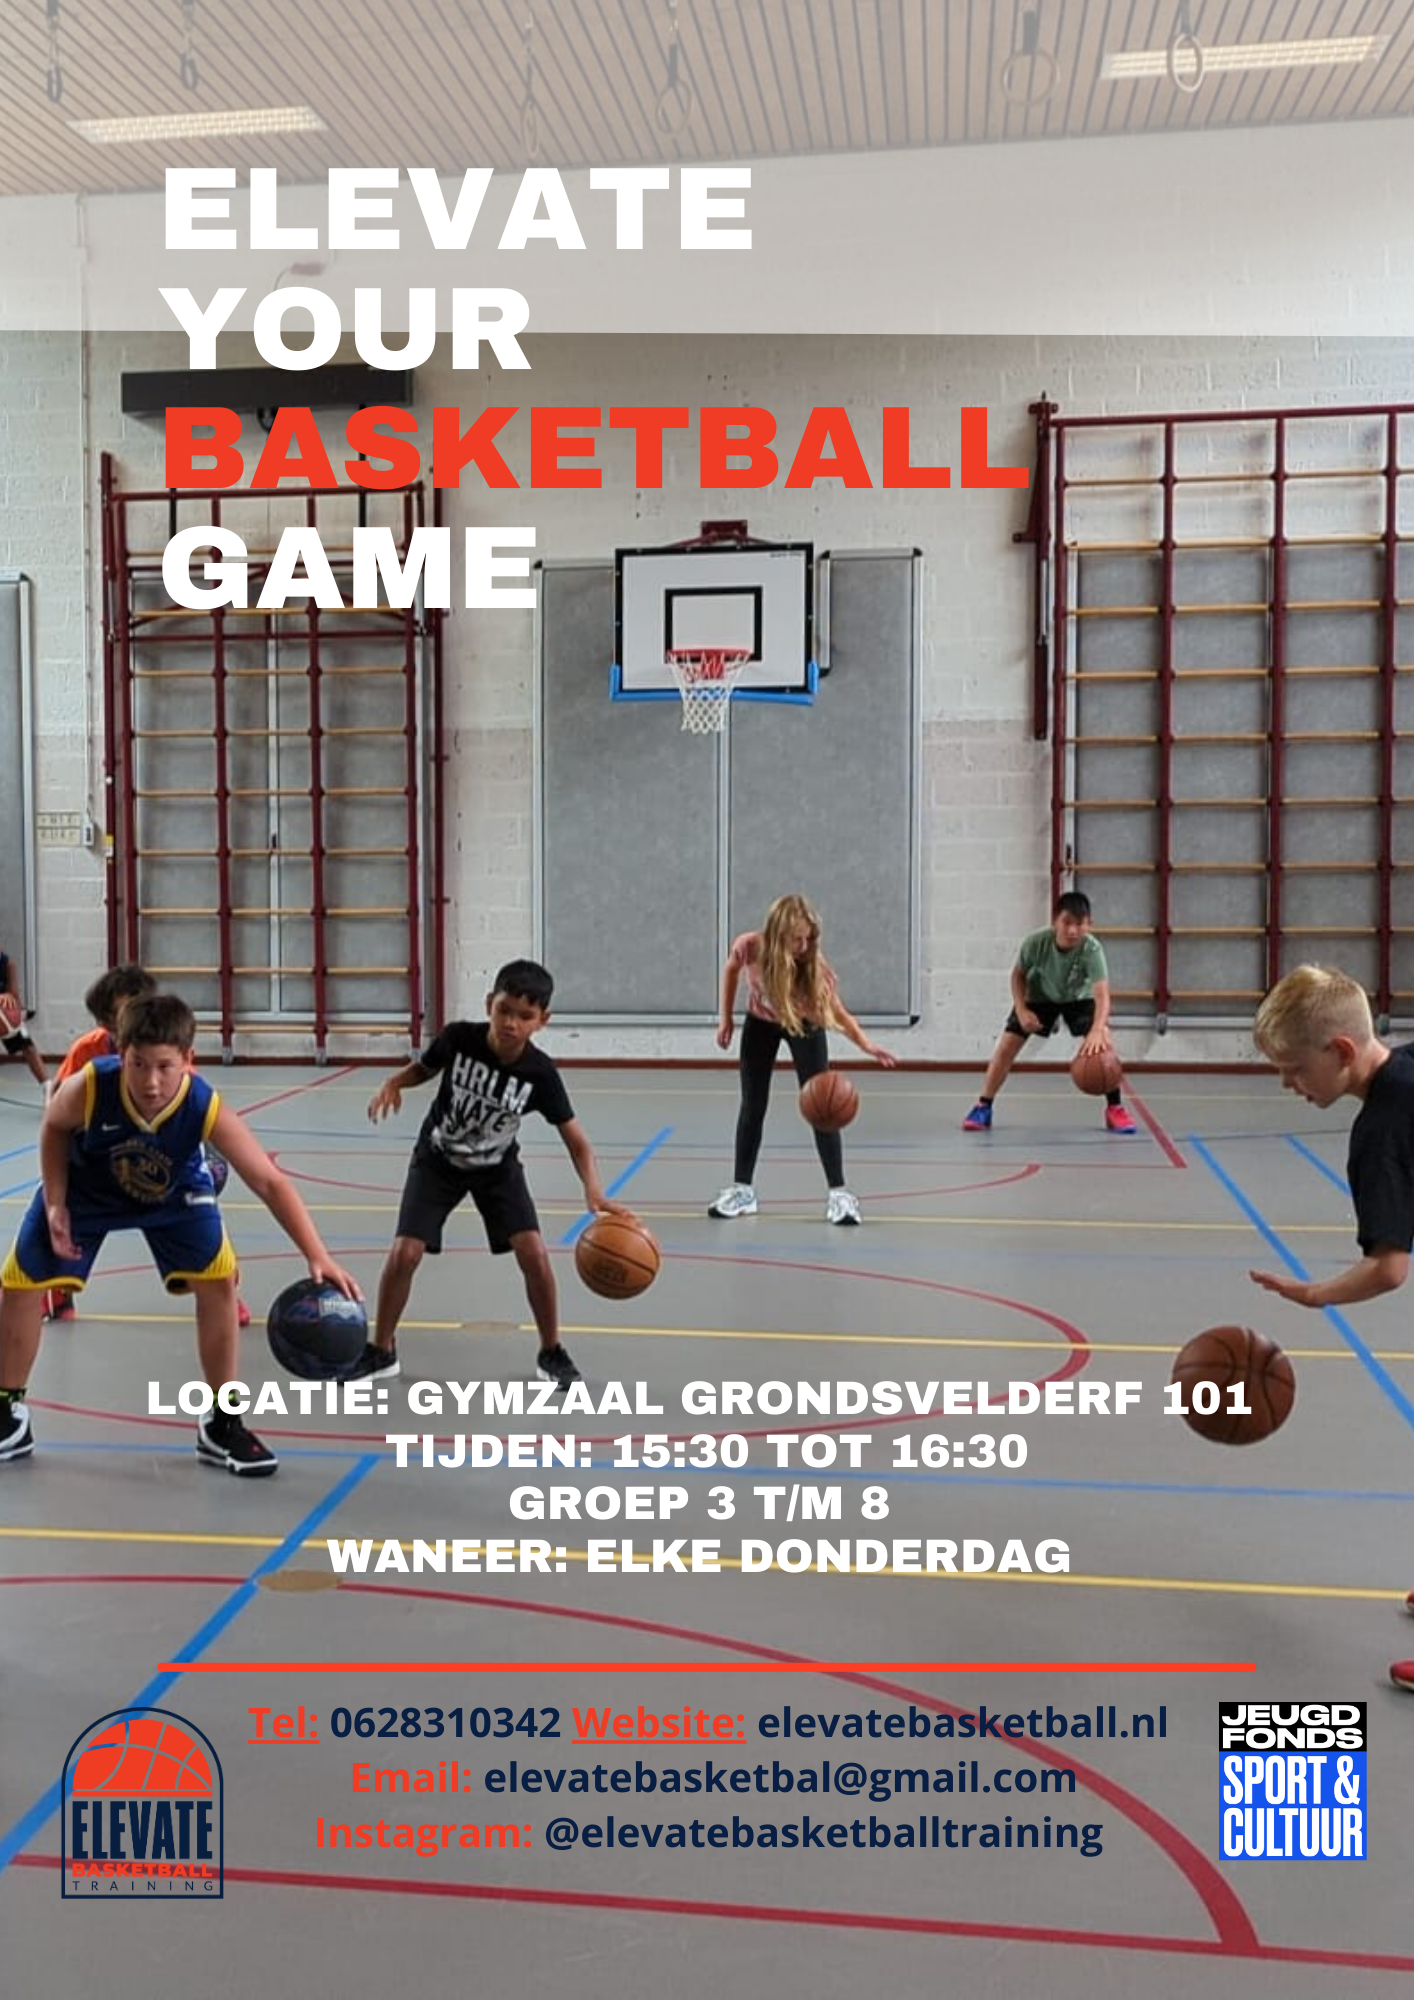 Kinderen spelen basketbal Rotterdam sport basisschool<br />
sportief